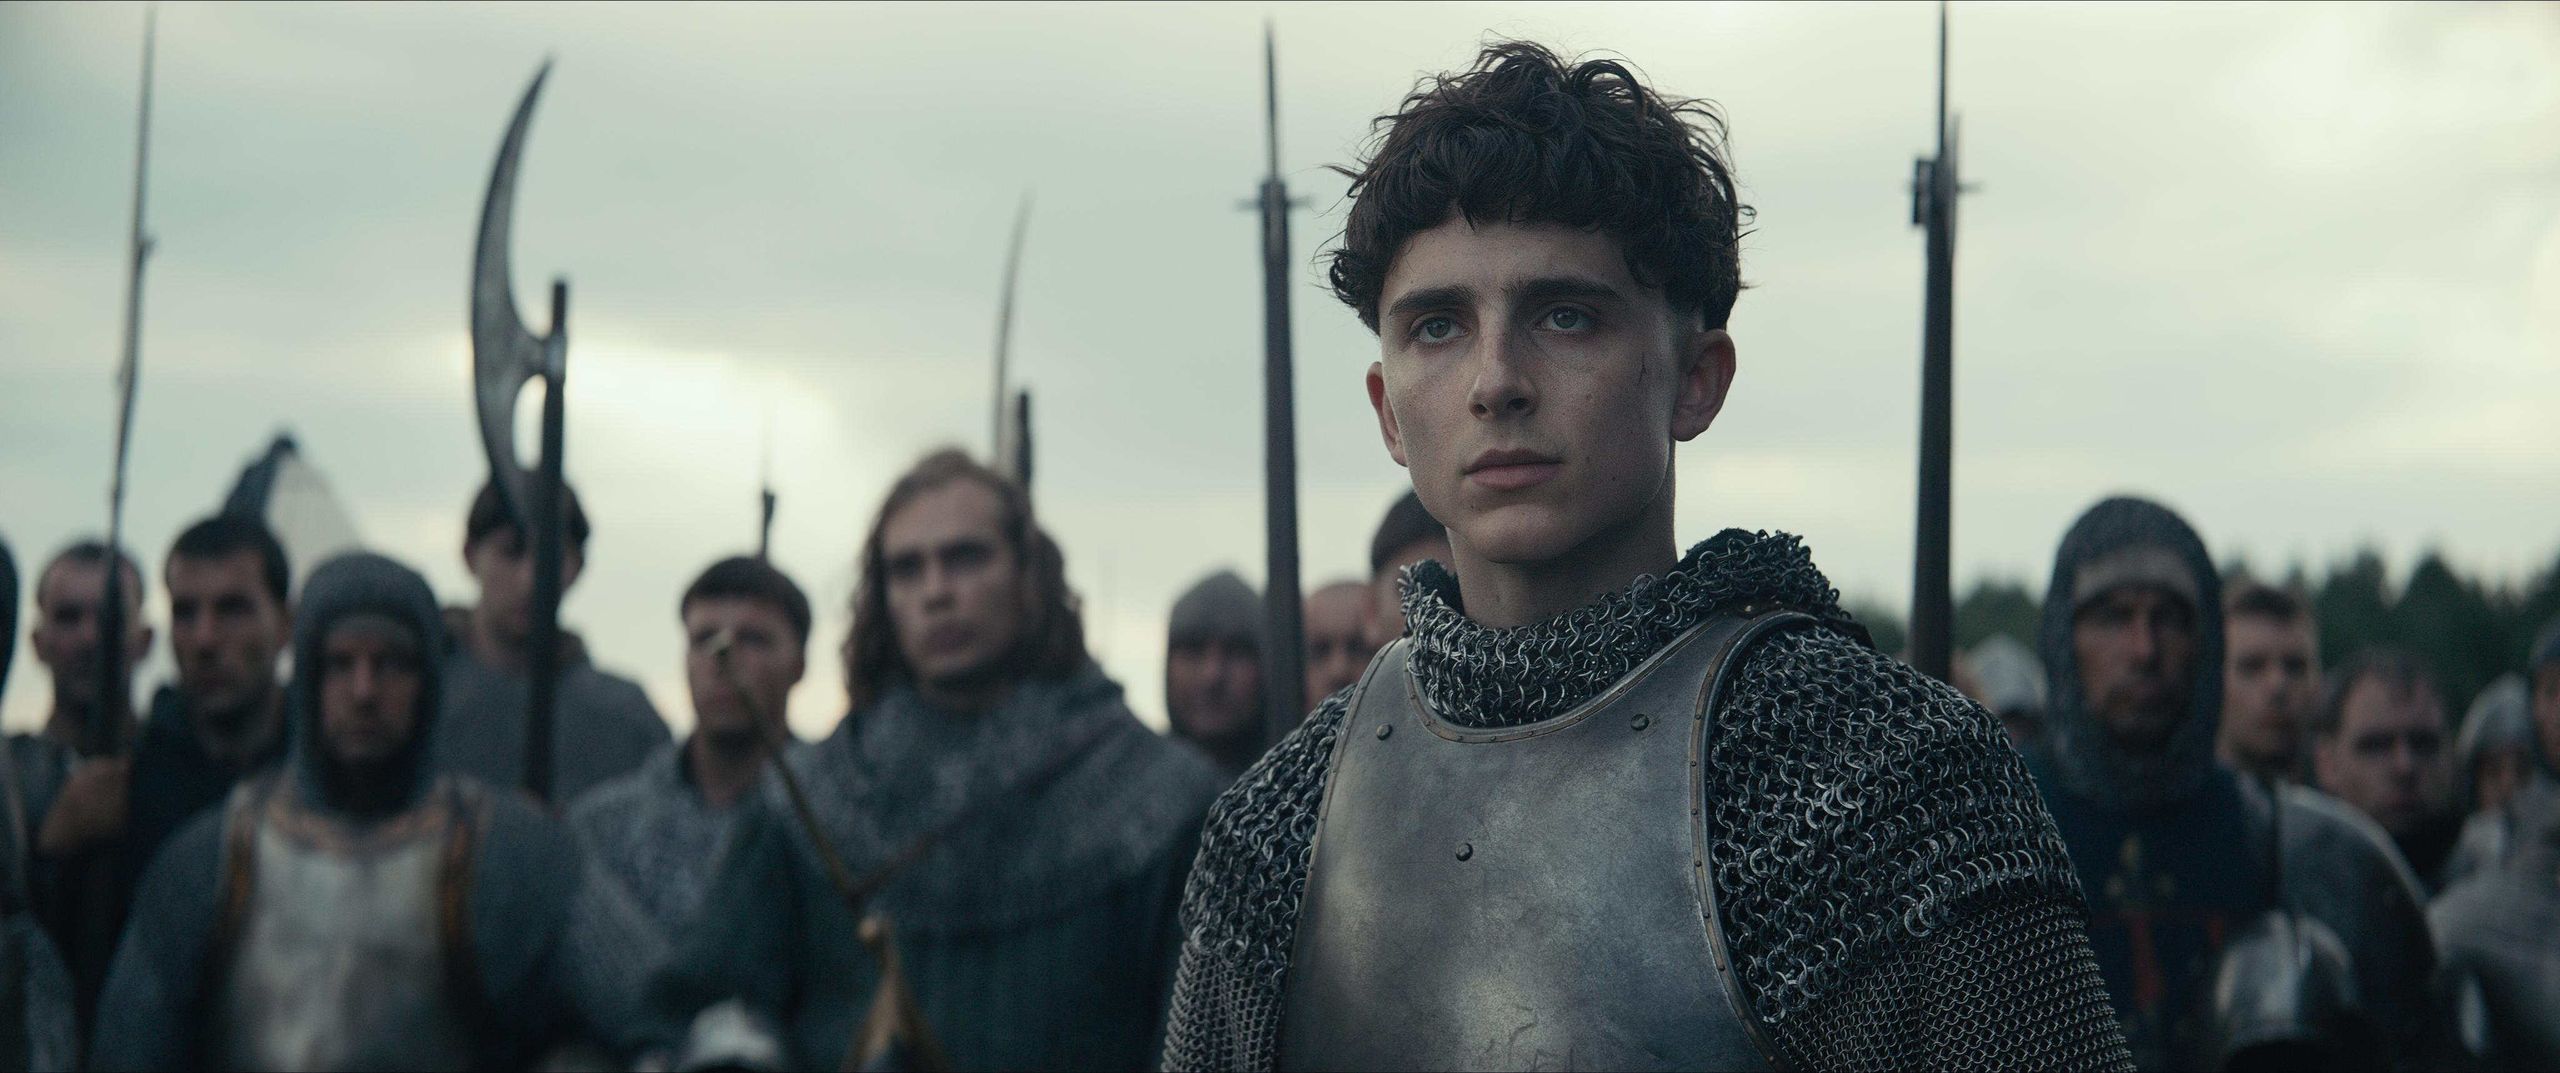 Peplum, Medioevo, storie (vere) in costume: i migliori film storici da vedere su Netflix- immagine 5